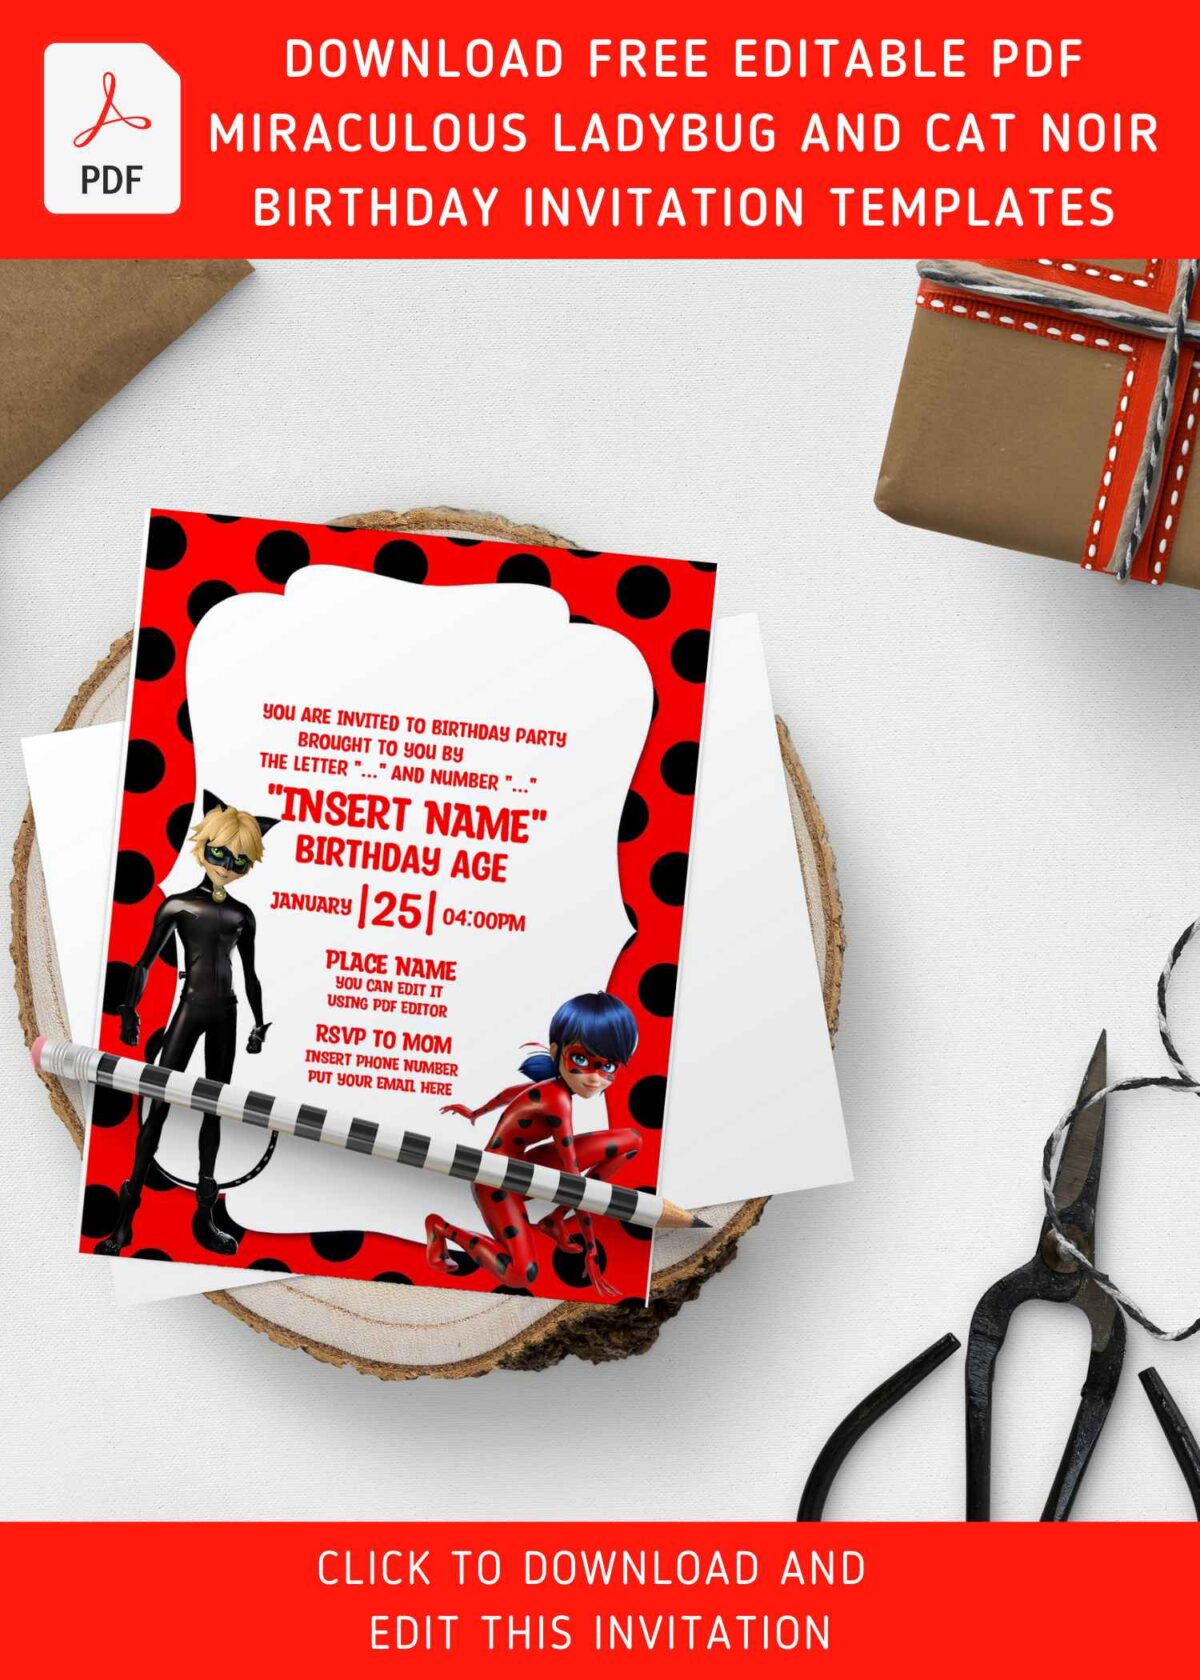 (Free Editable PDF) Super-Hero Ladybug And Cat Noir Birthday Invitation Templates with 